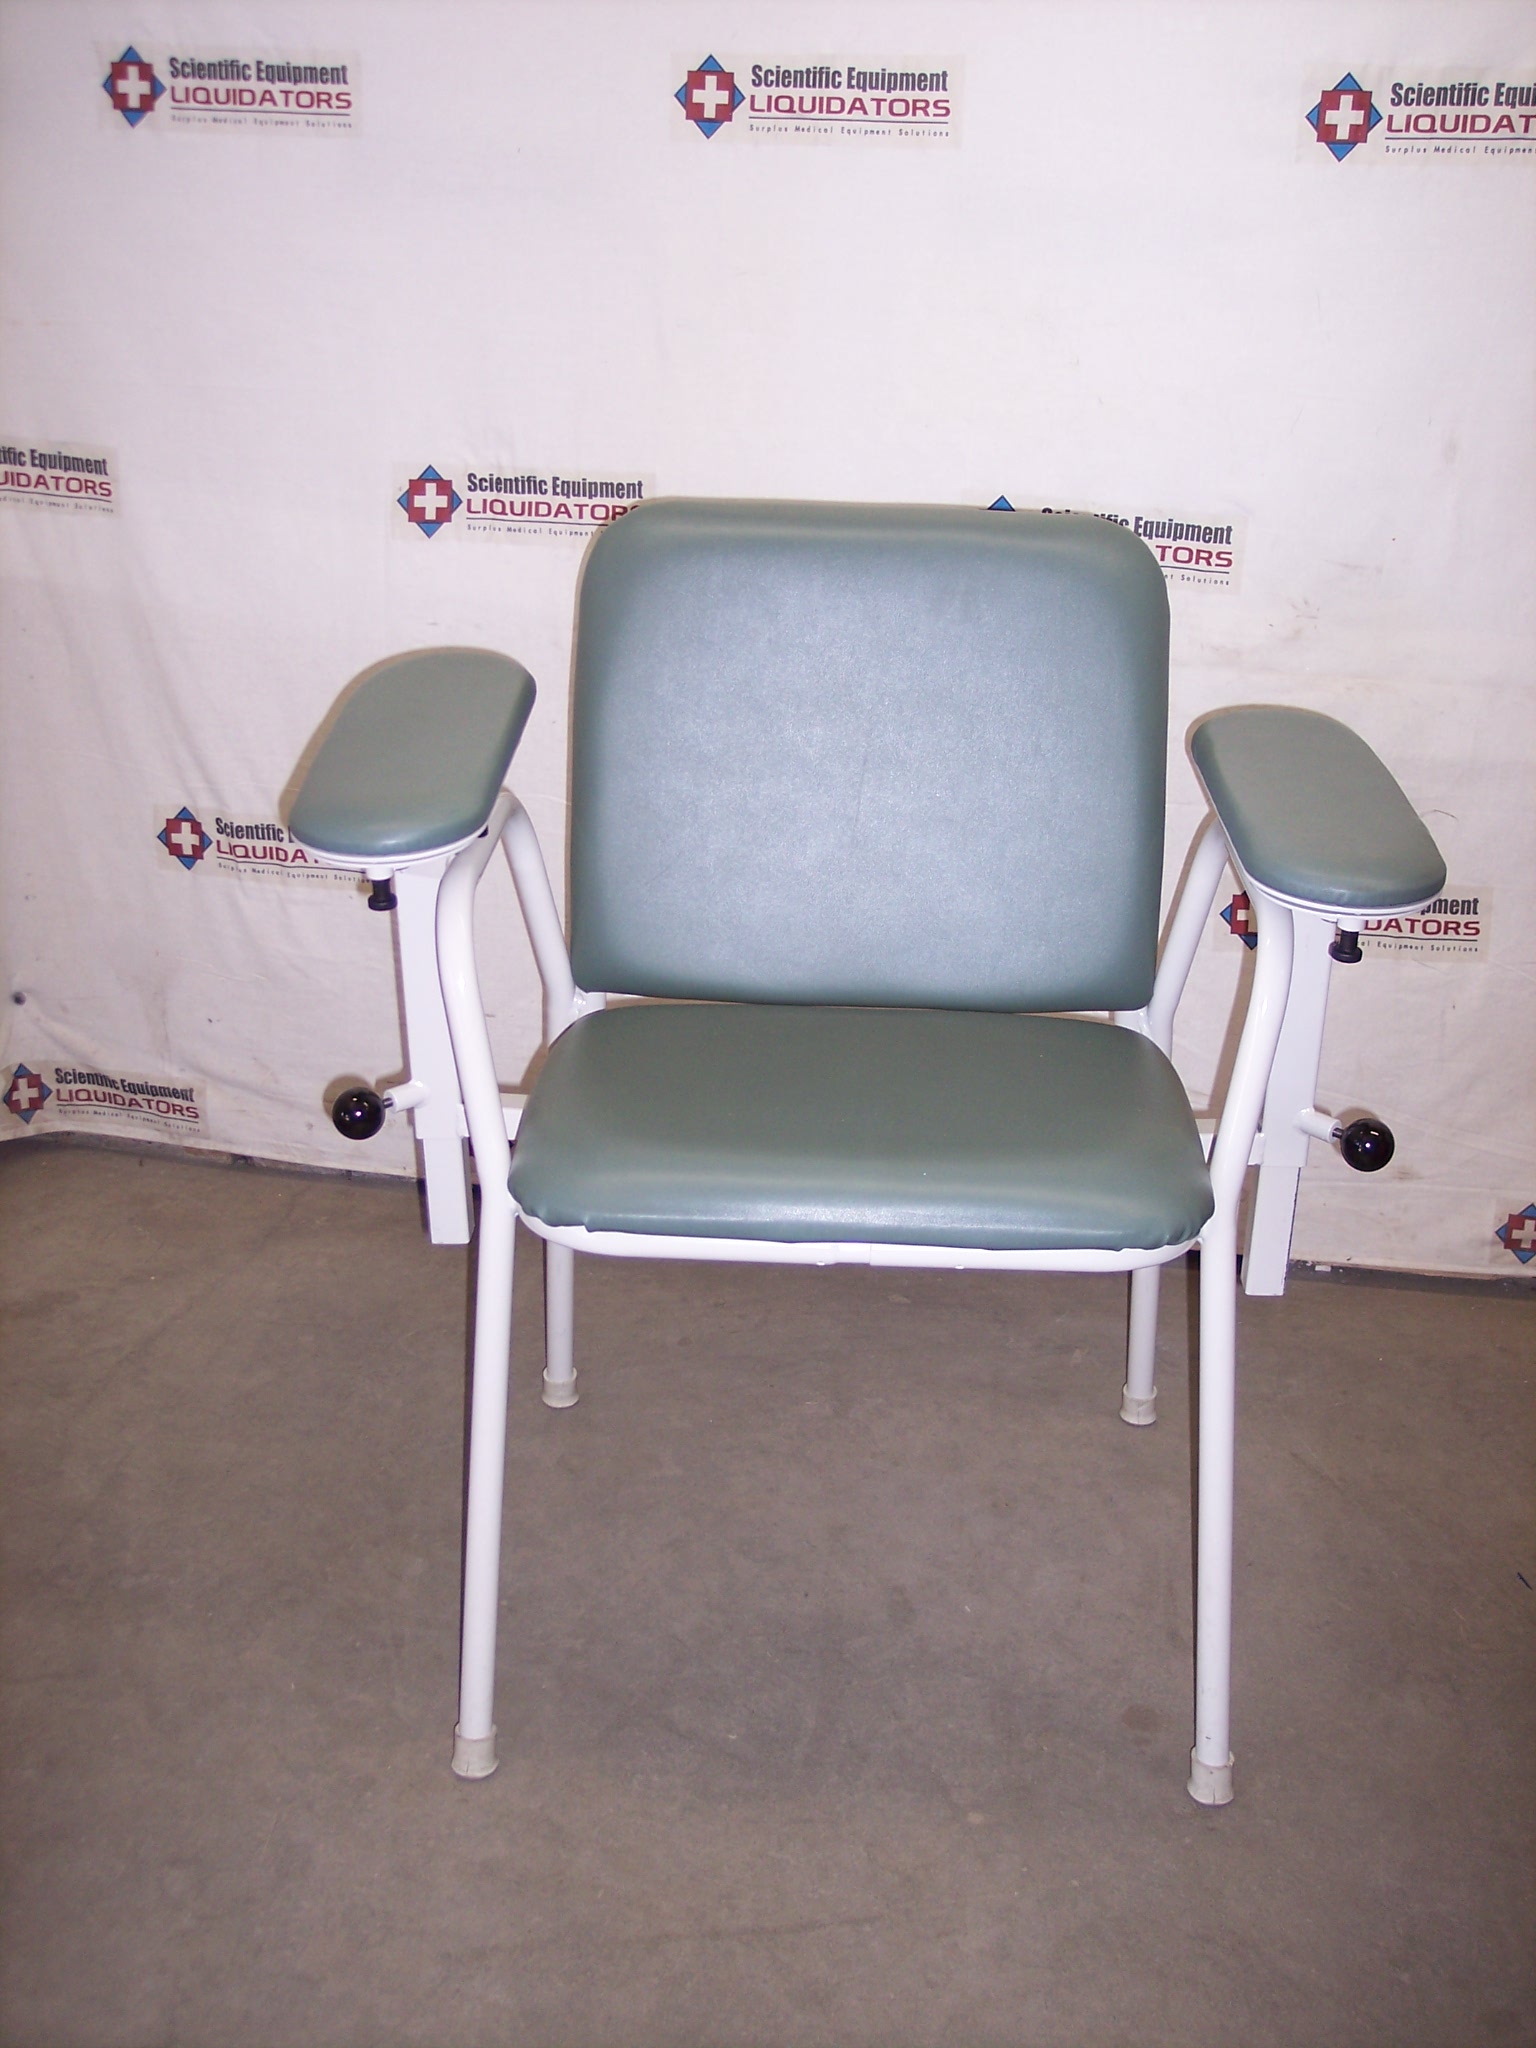 Midmark 281-002-230 Blood Draw Chair